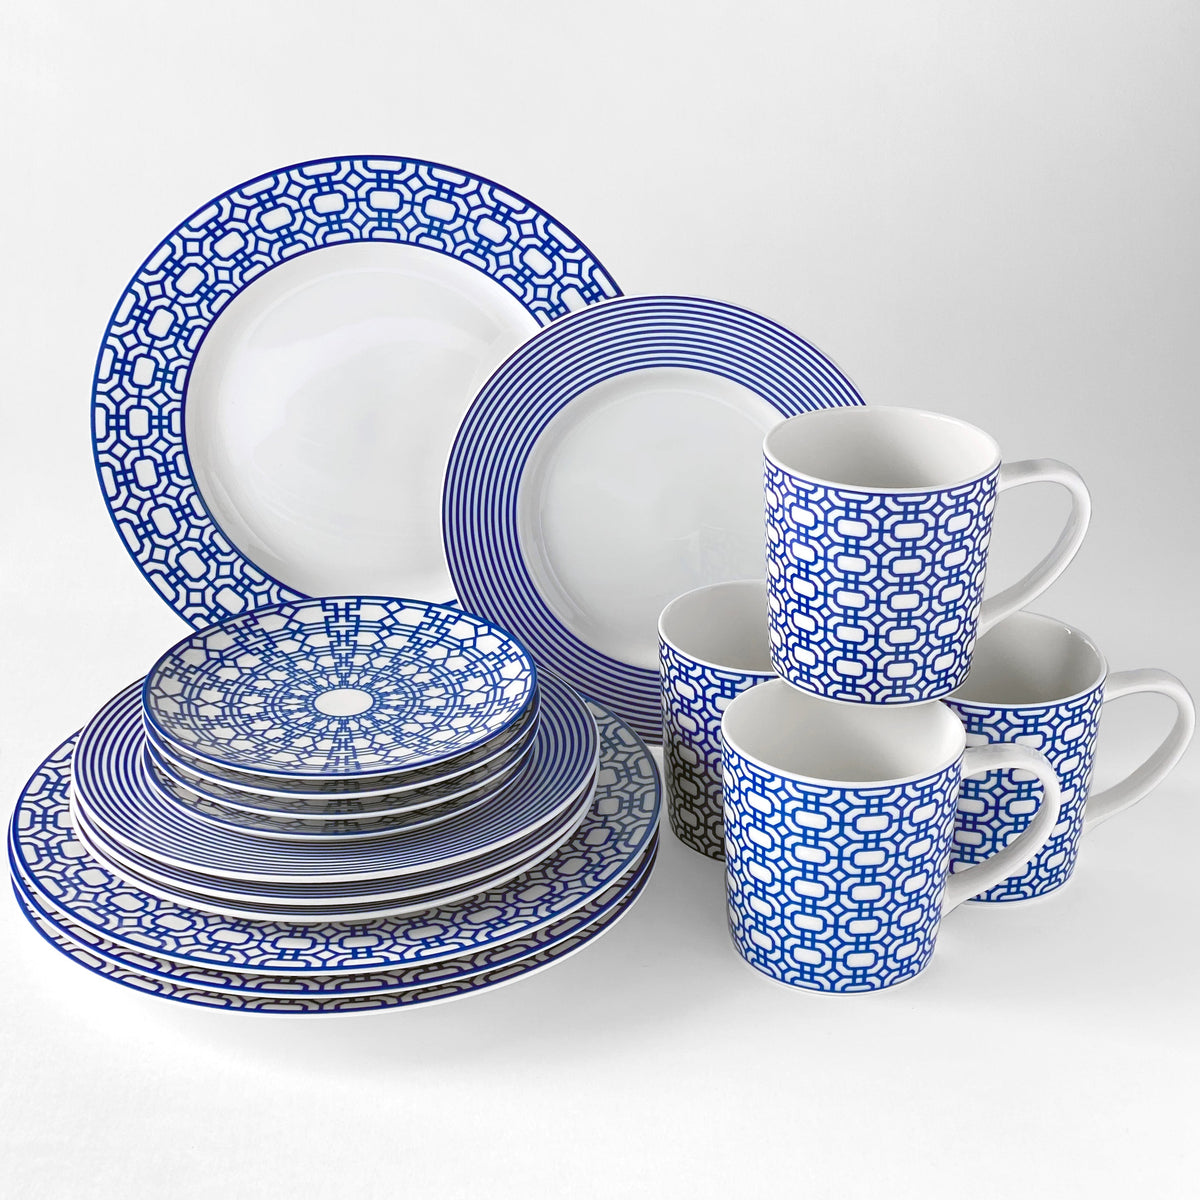 A Caskata Artisanal Home Newport Canapé Plates dinnerware set on a white surface.